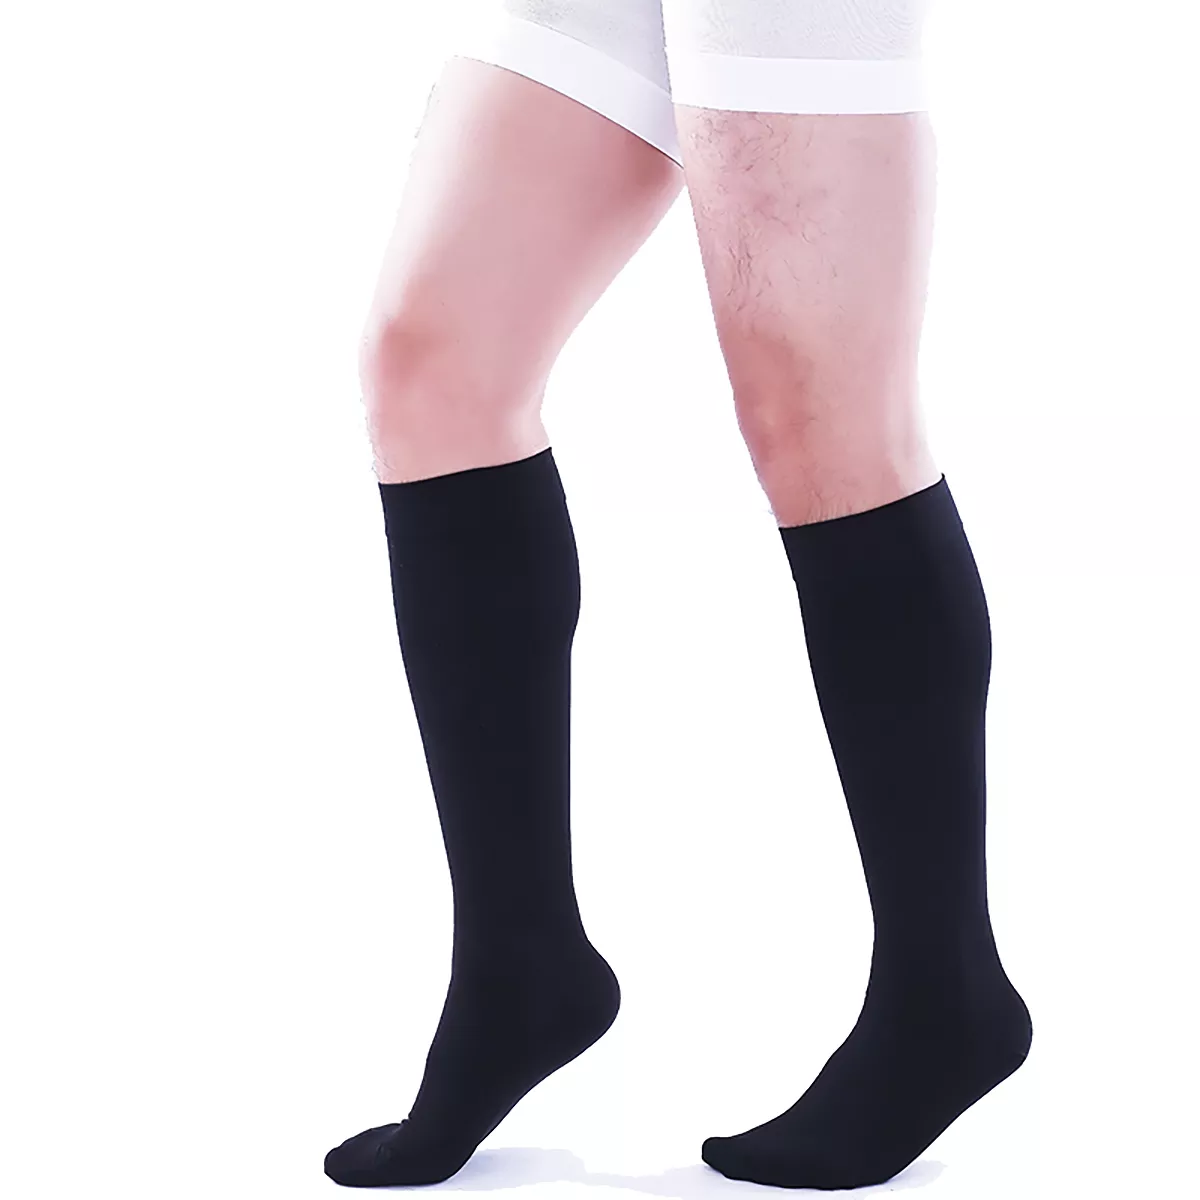 Varcoh ® 8-15 mmHg Men Knee High Closed Toe Compression Socks Black